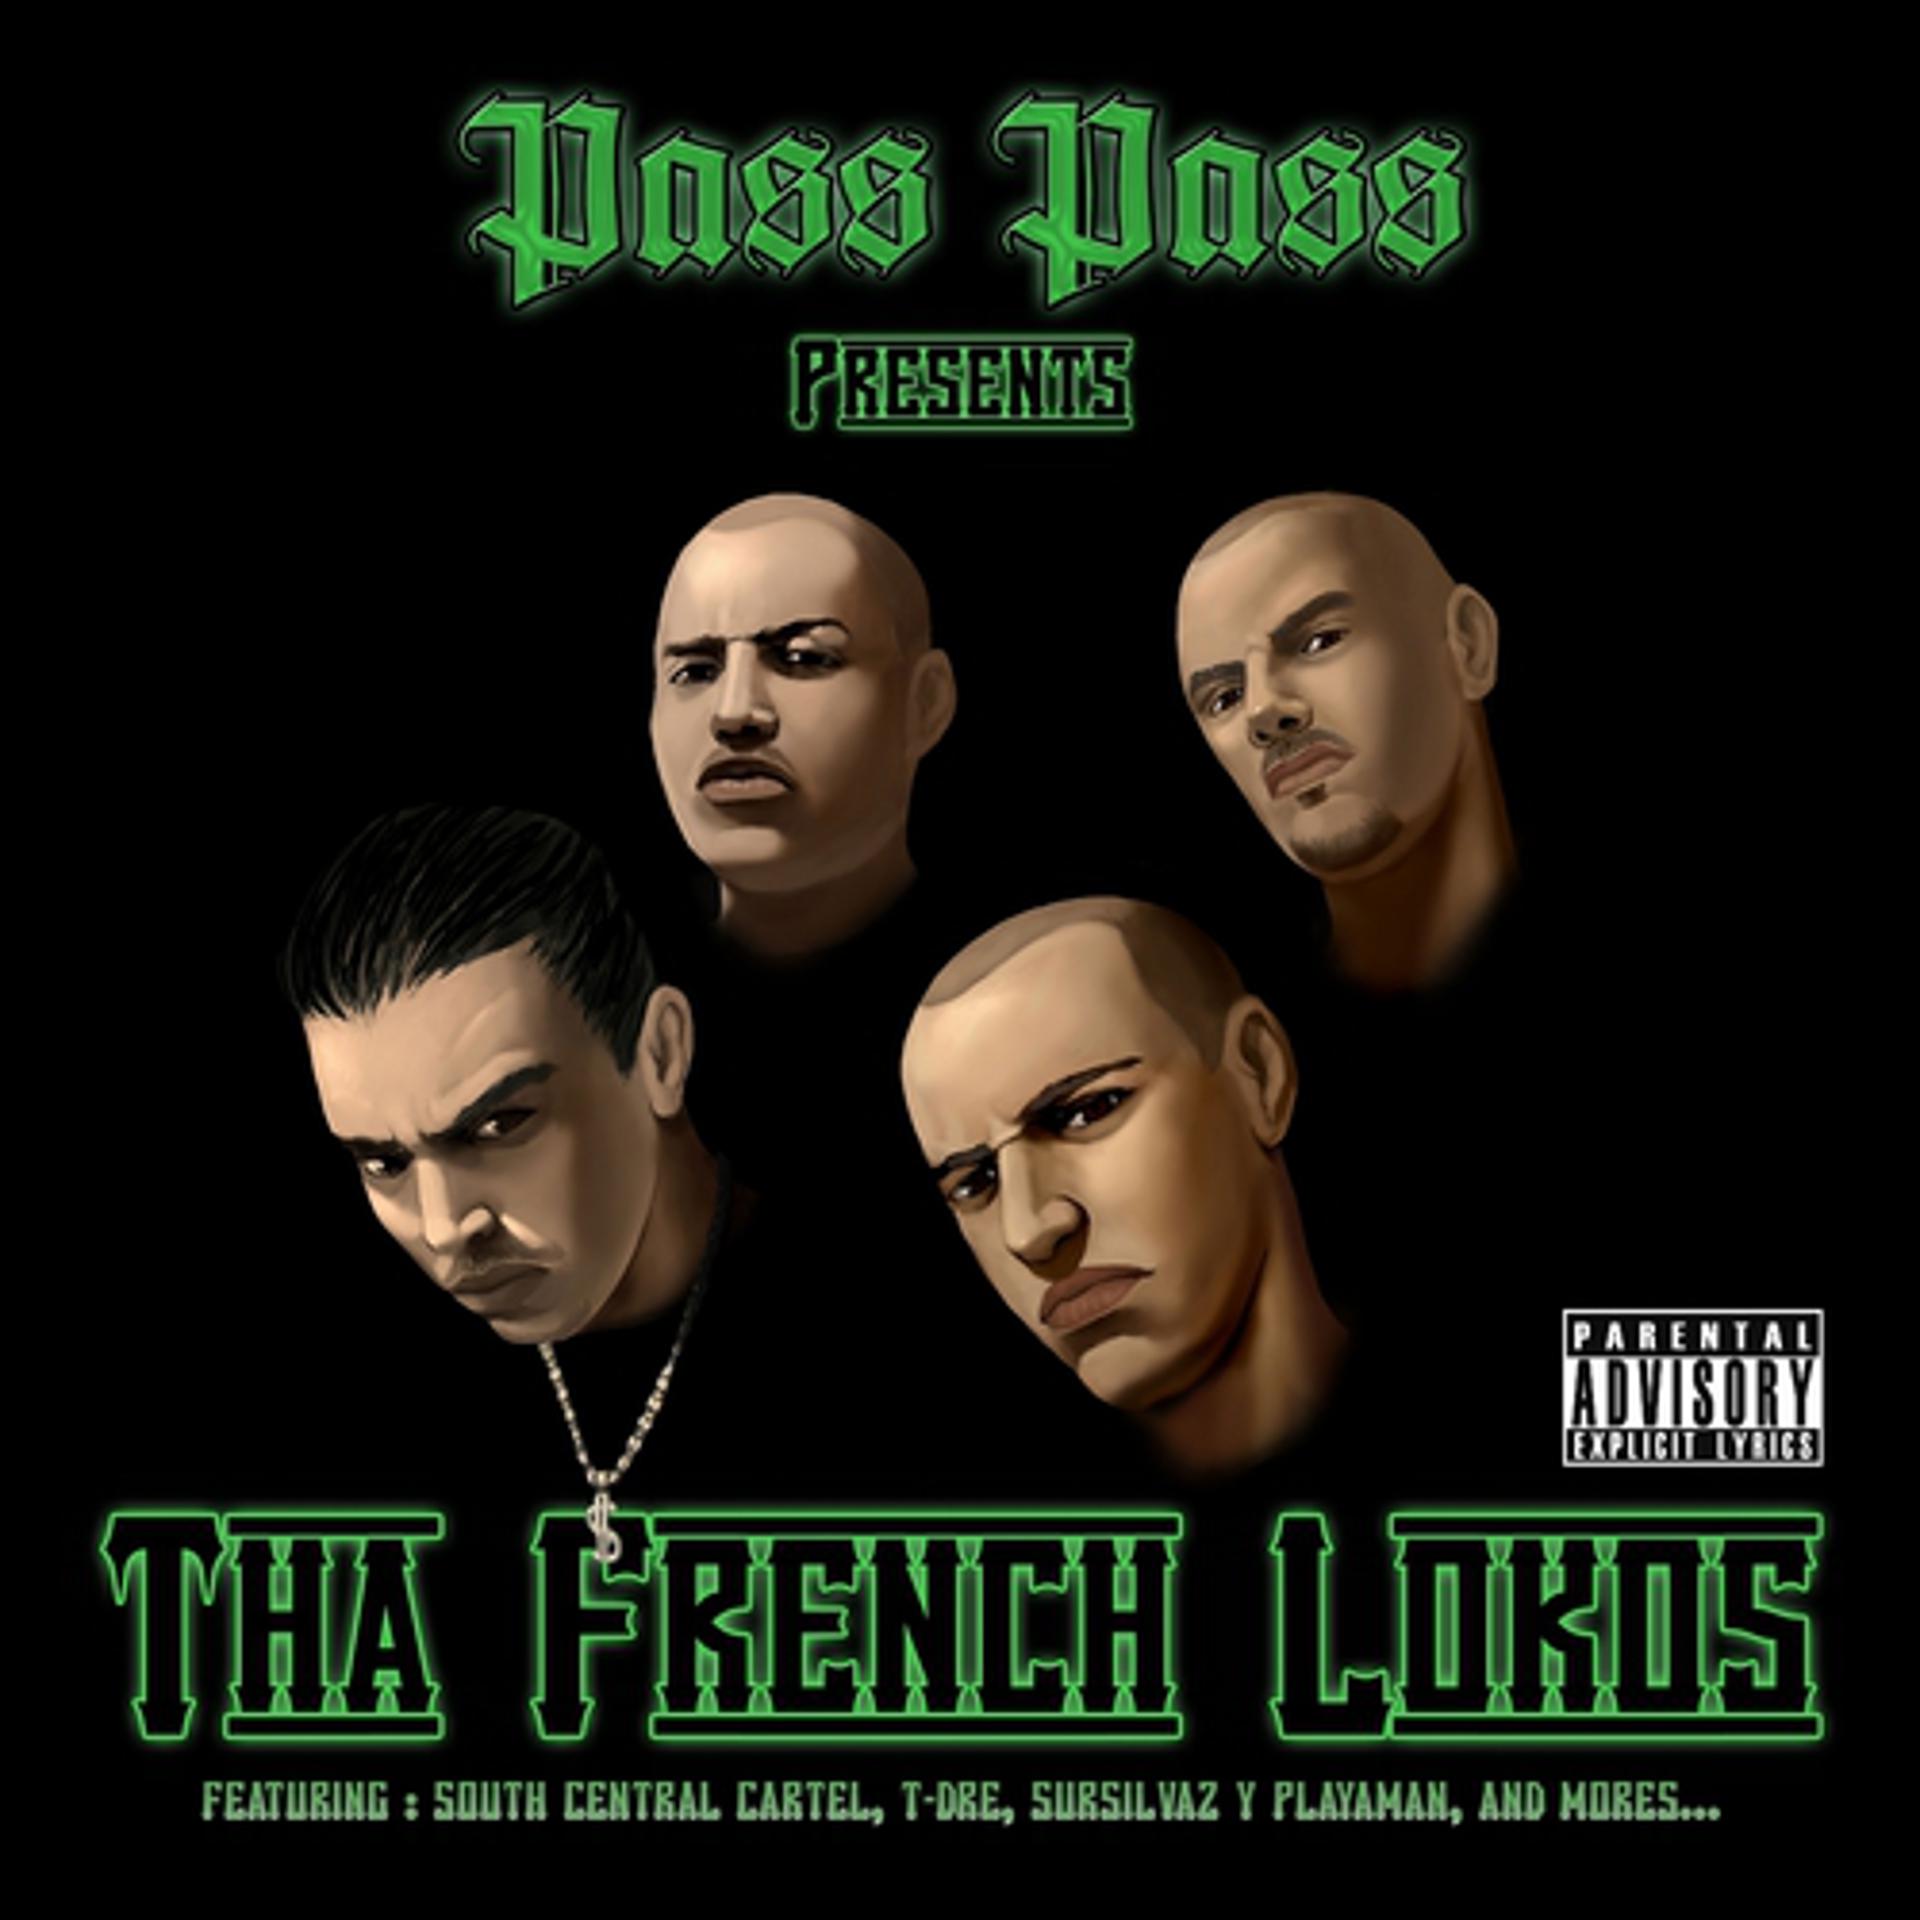 Постер альбома Tha French Lokos